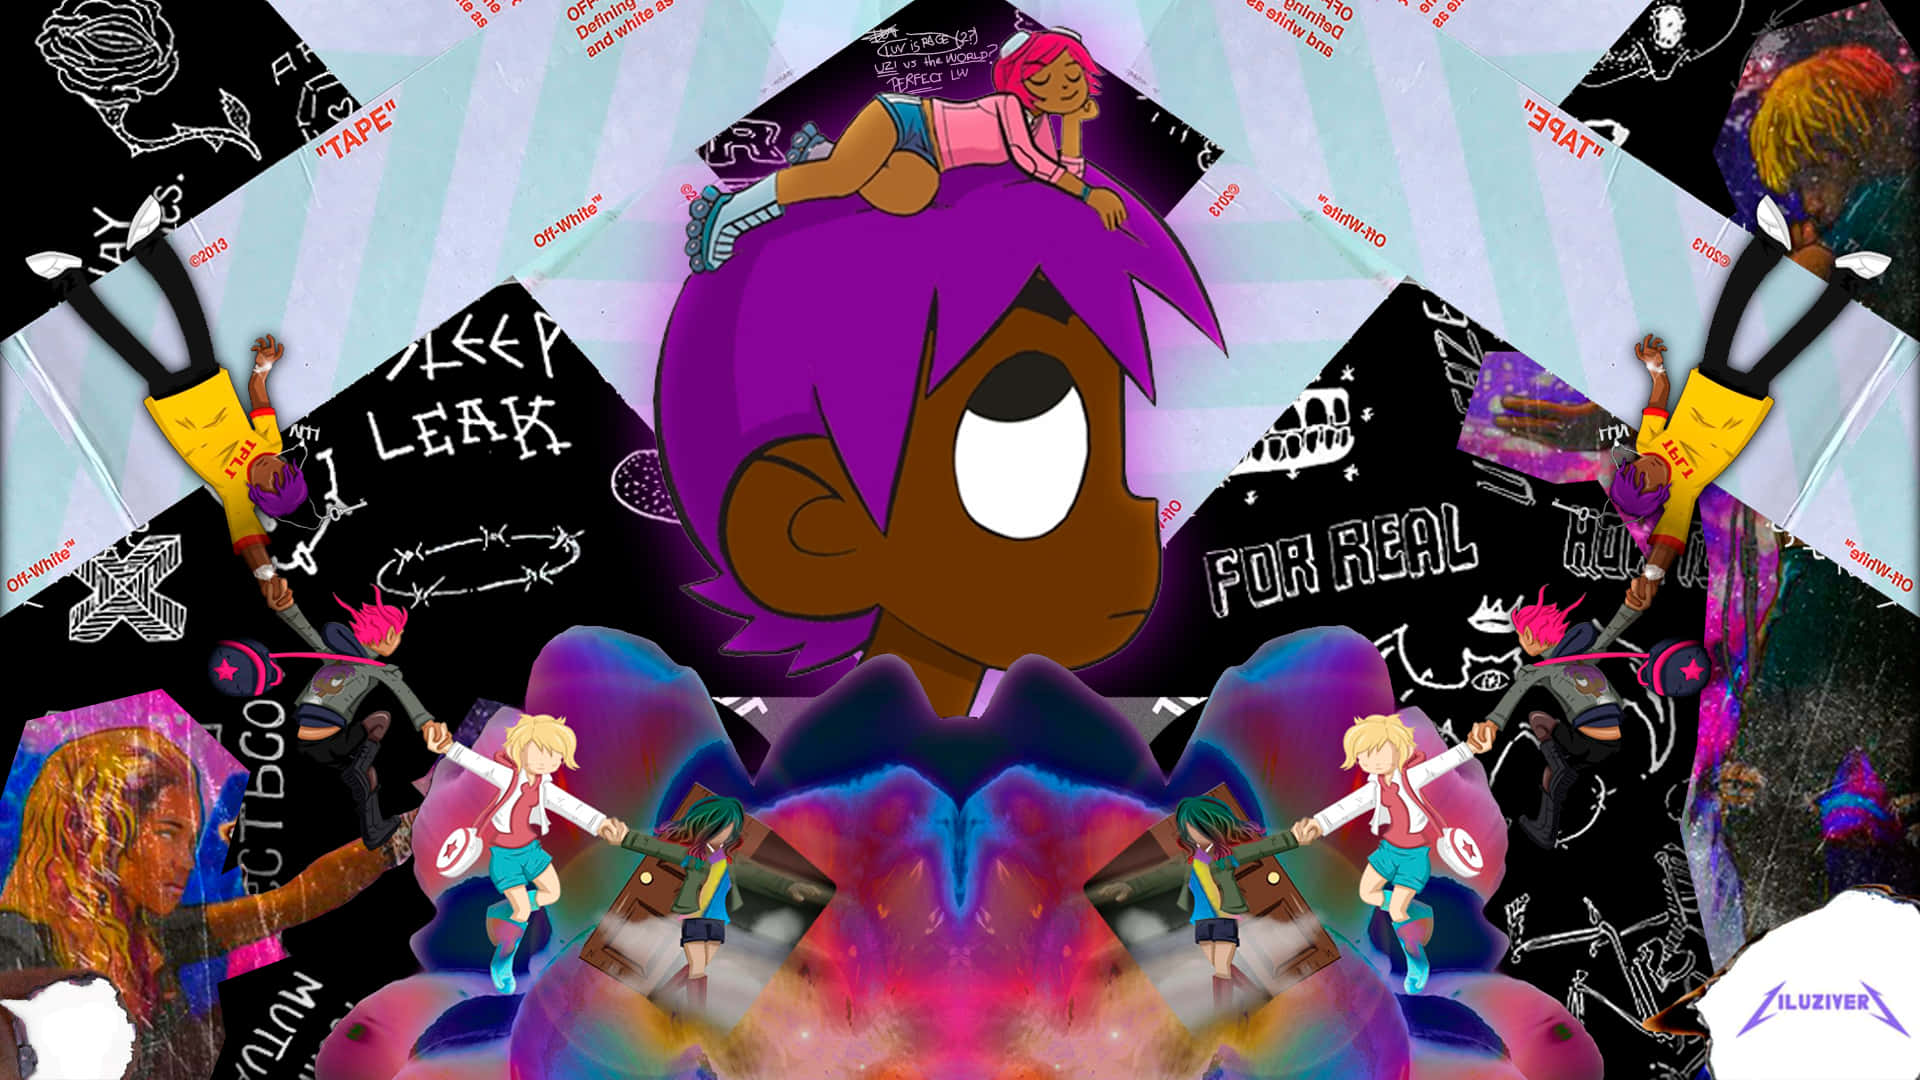 : New album release from hip hop star Lil Uzi Wallpaper